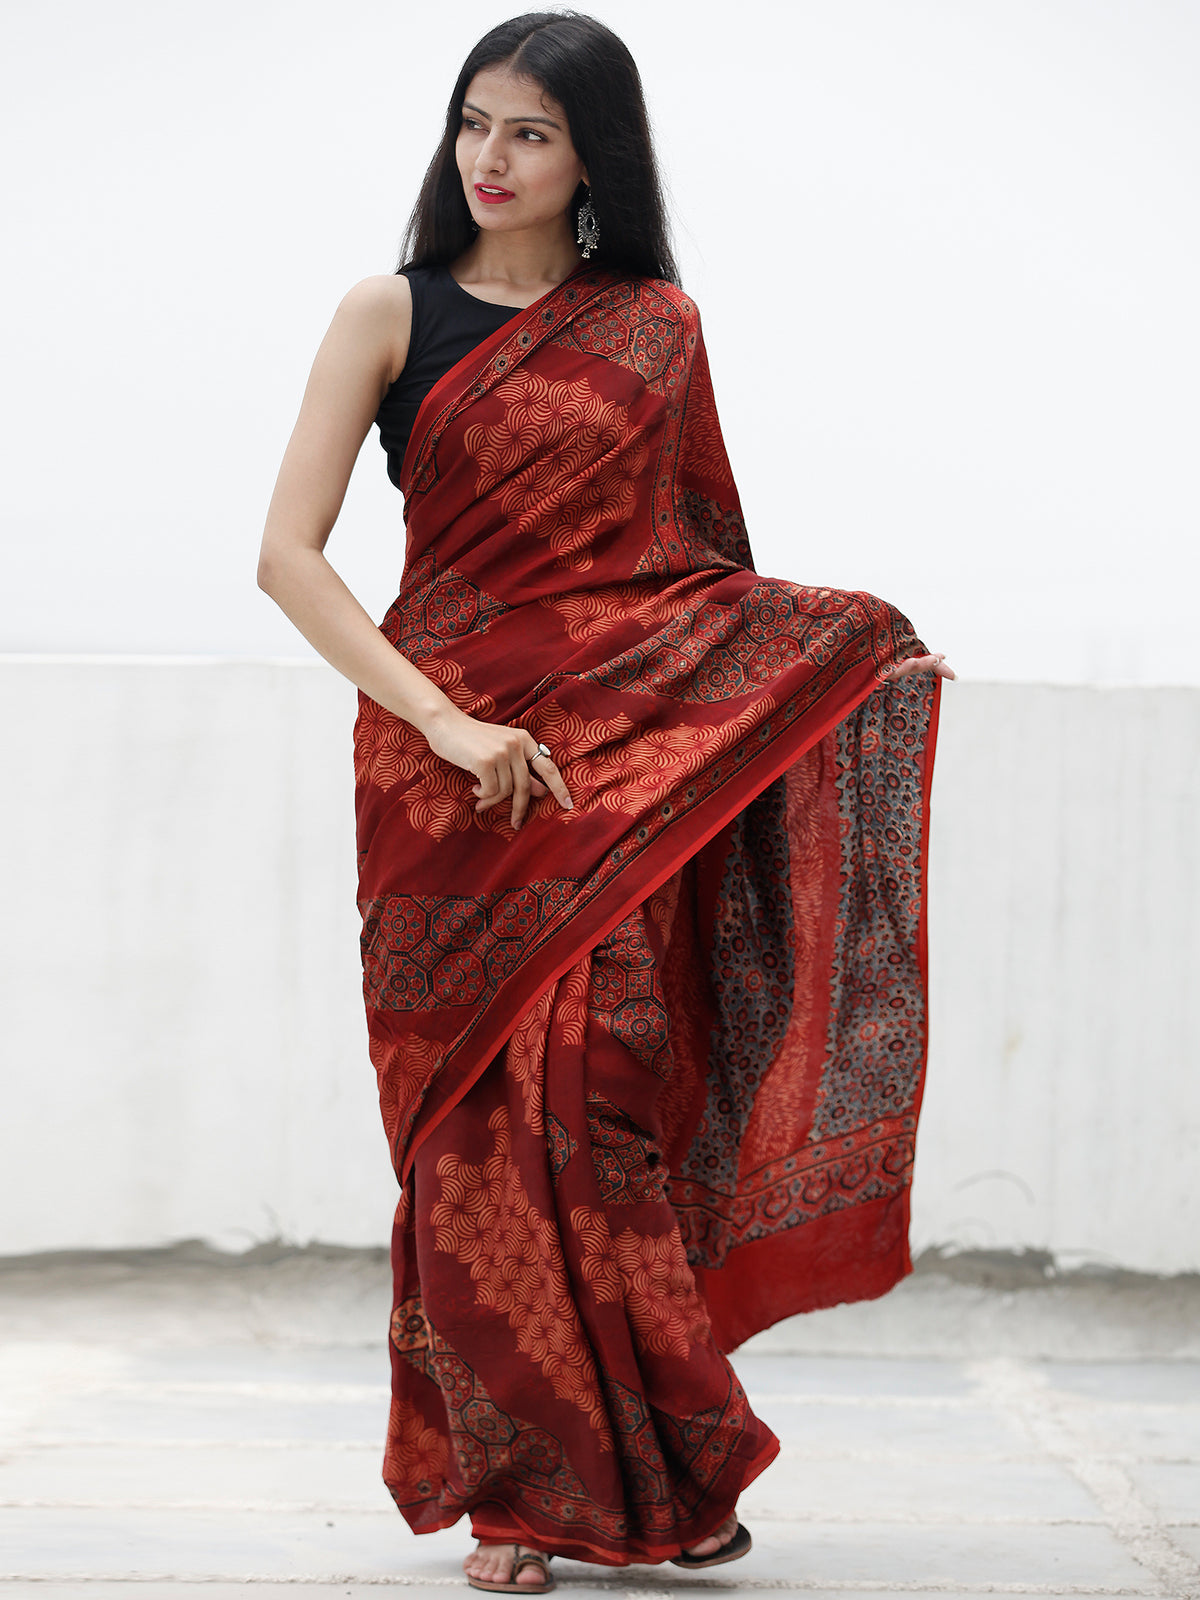 Red Black Indigo Beige Ajrakh Hand Block Printed Modal Silk Saree in Natural Colors - S031703703